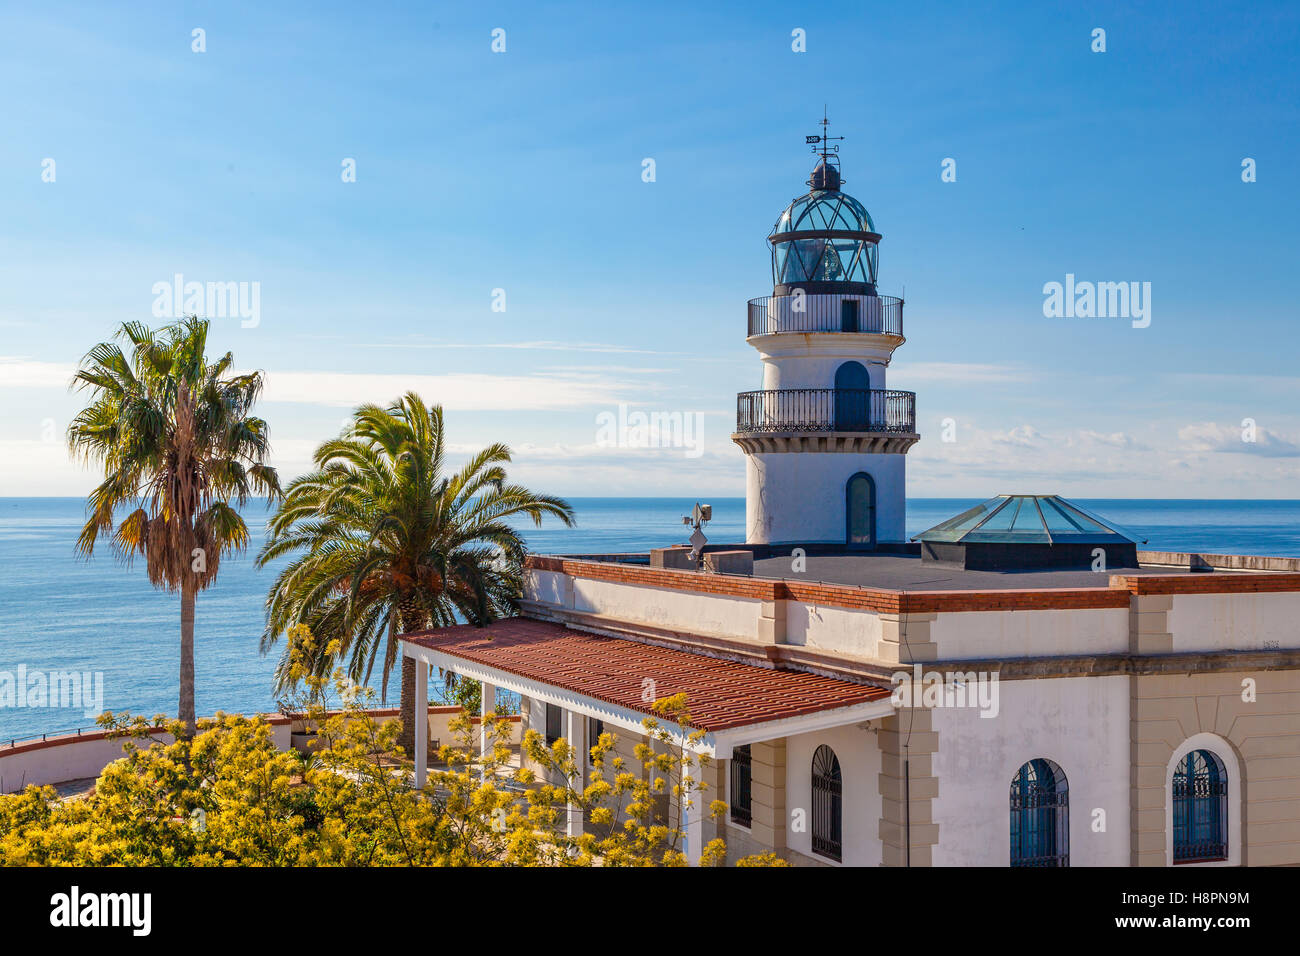 The famous lighthouse near Calella, Costa Brava, Spain, overlooking the blue Mediterranean Sea. Stock Photo